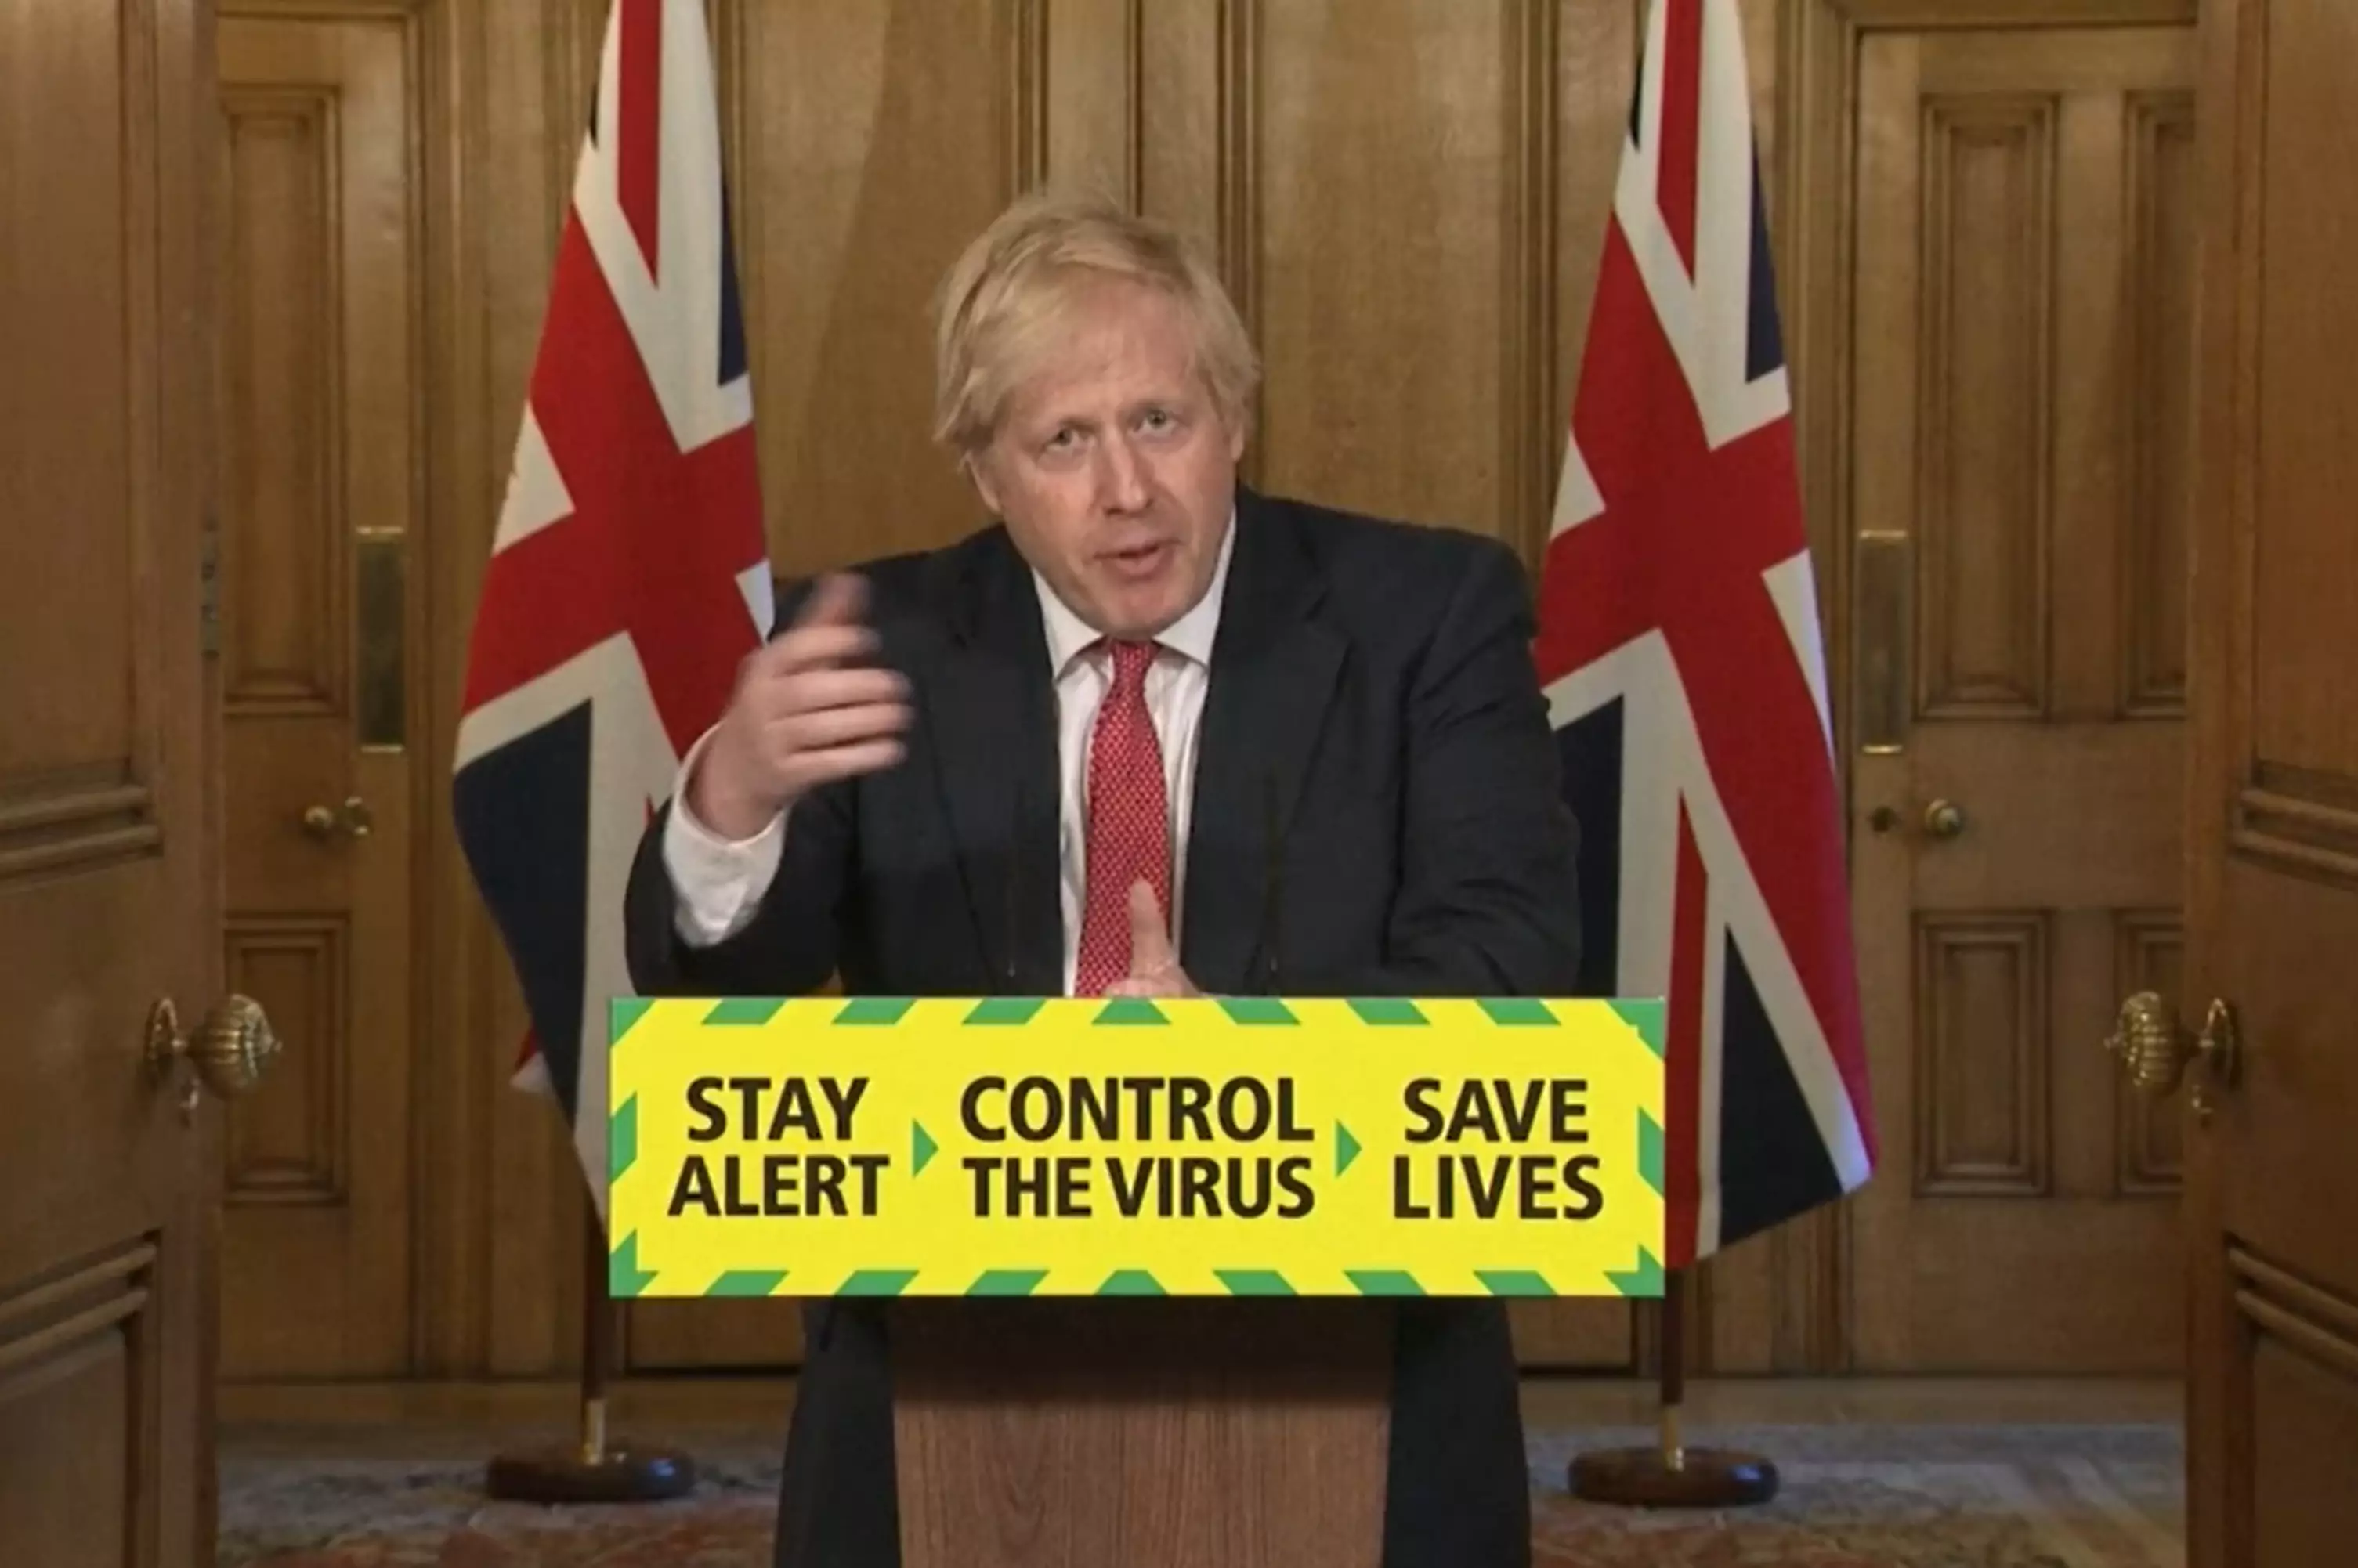 Boris Johnson announced an easing of lockdown measures.